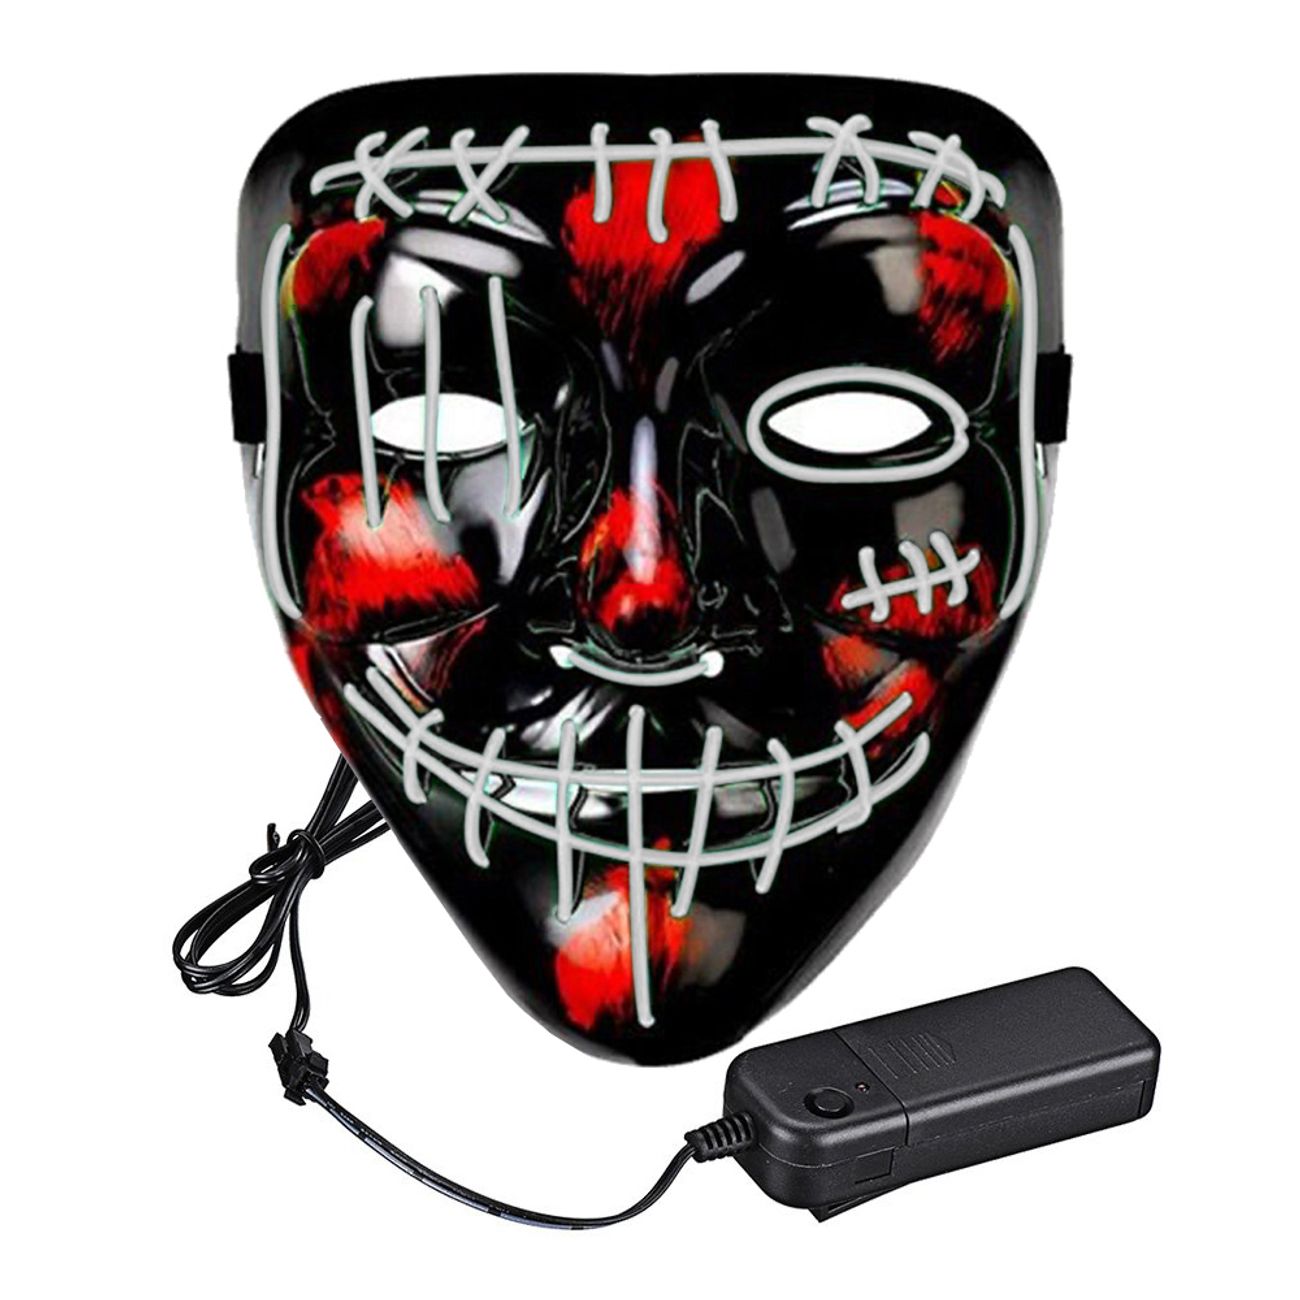 el-wire-purge-2-led-mask-39